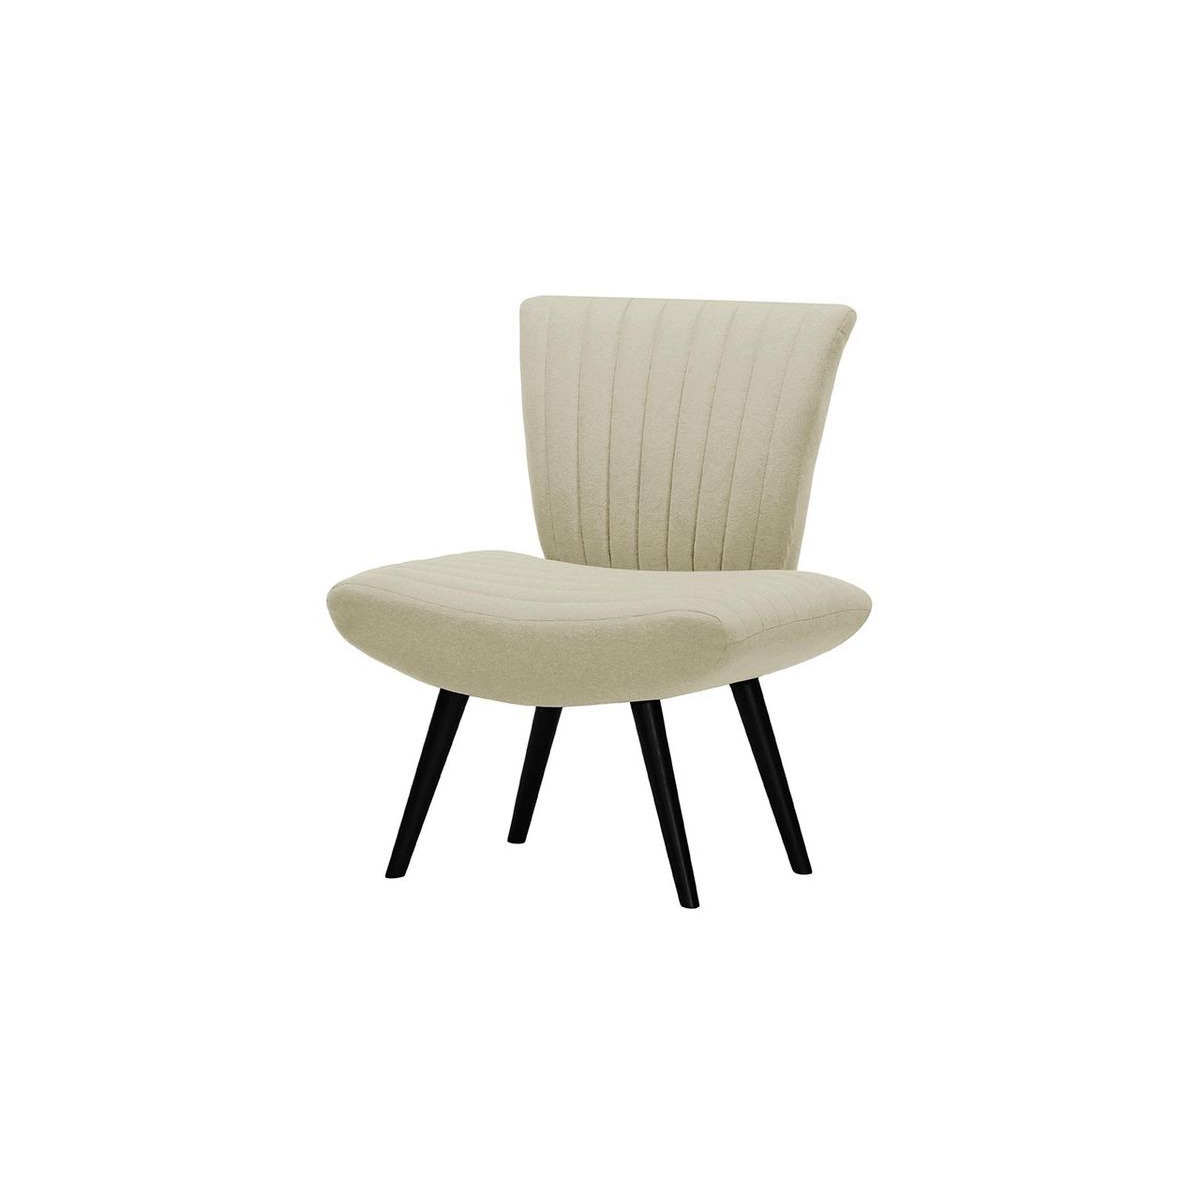 Tago Chair, grey - image 1